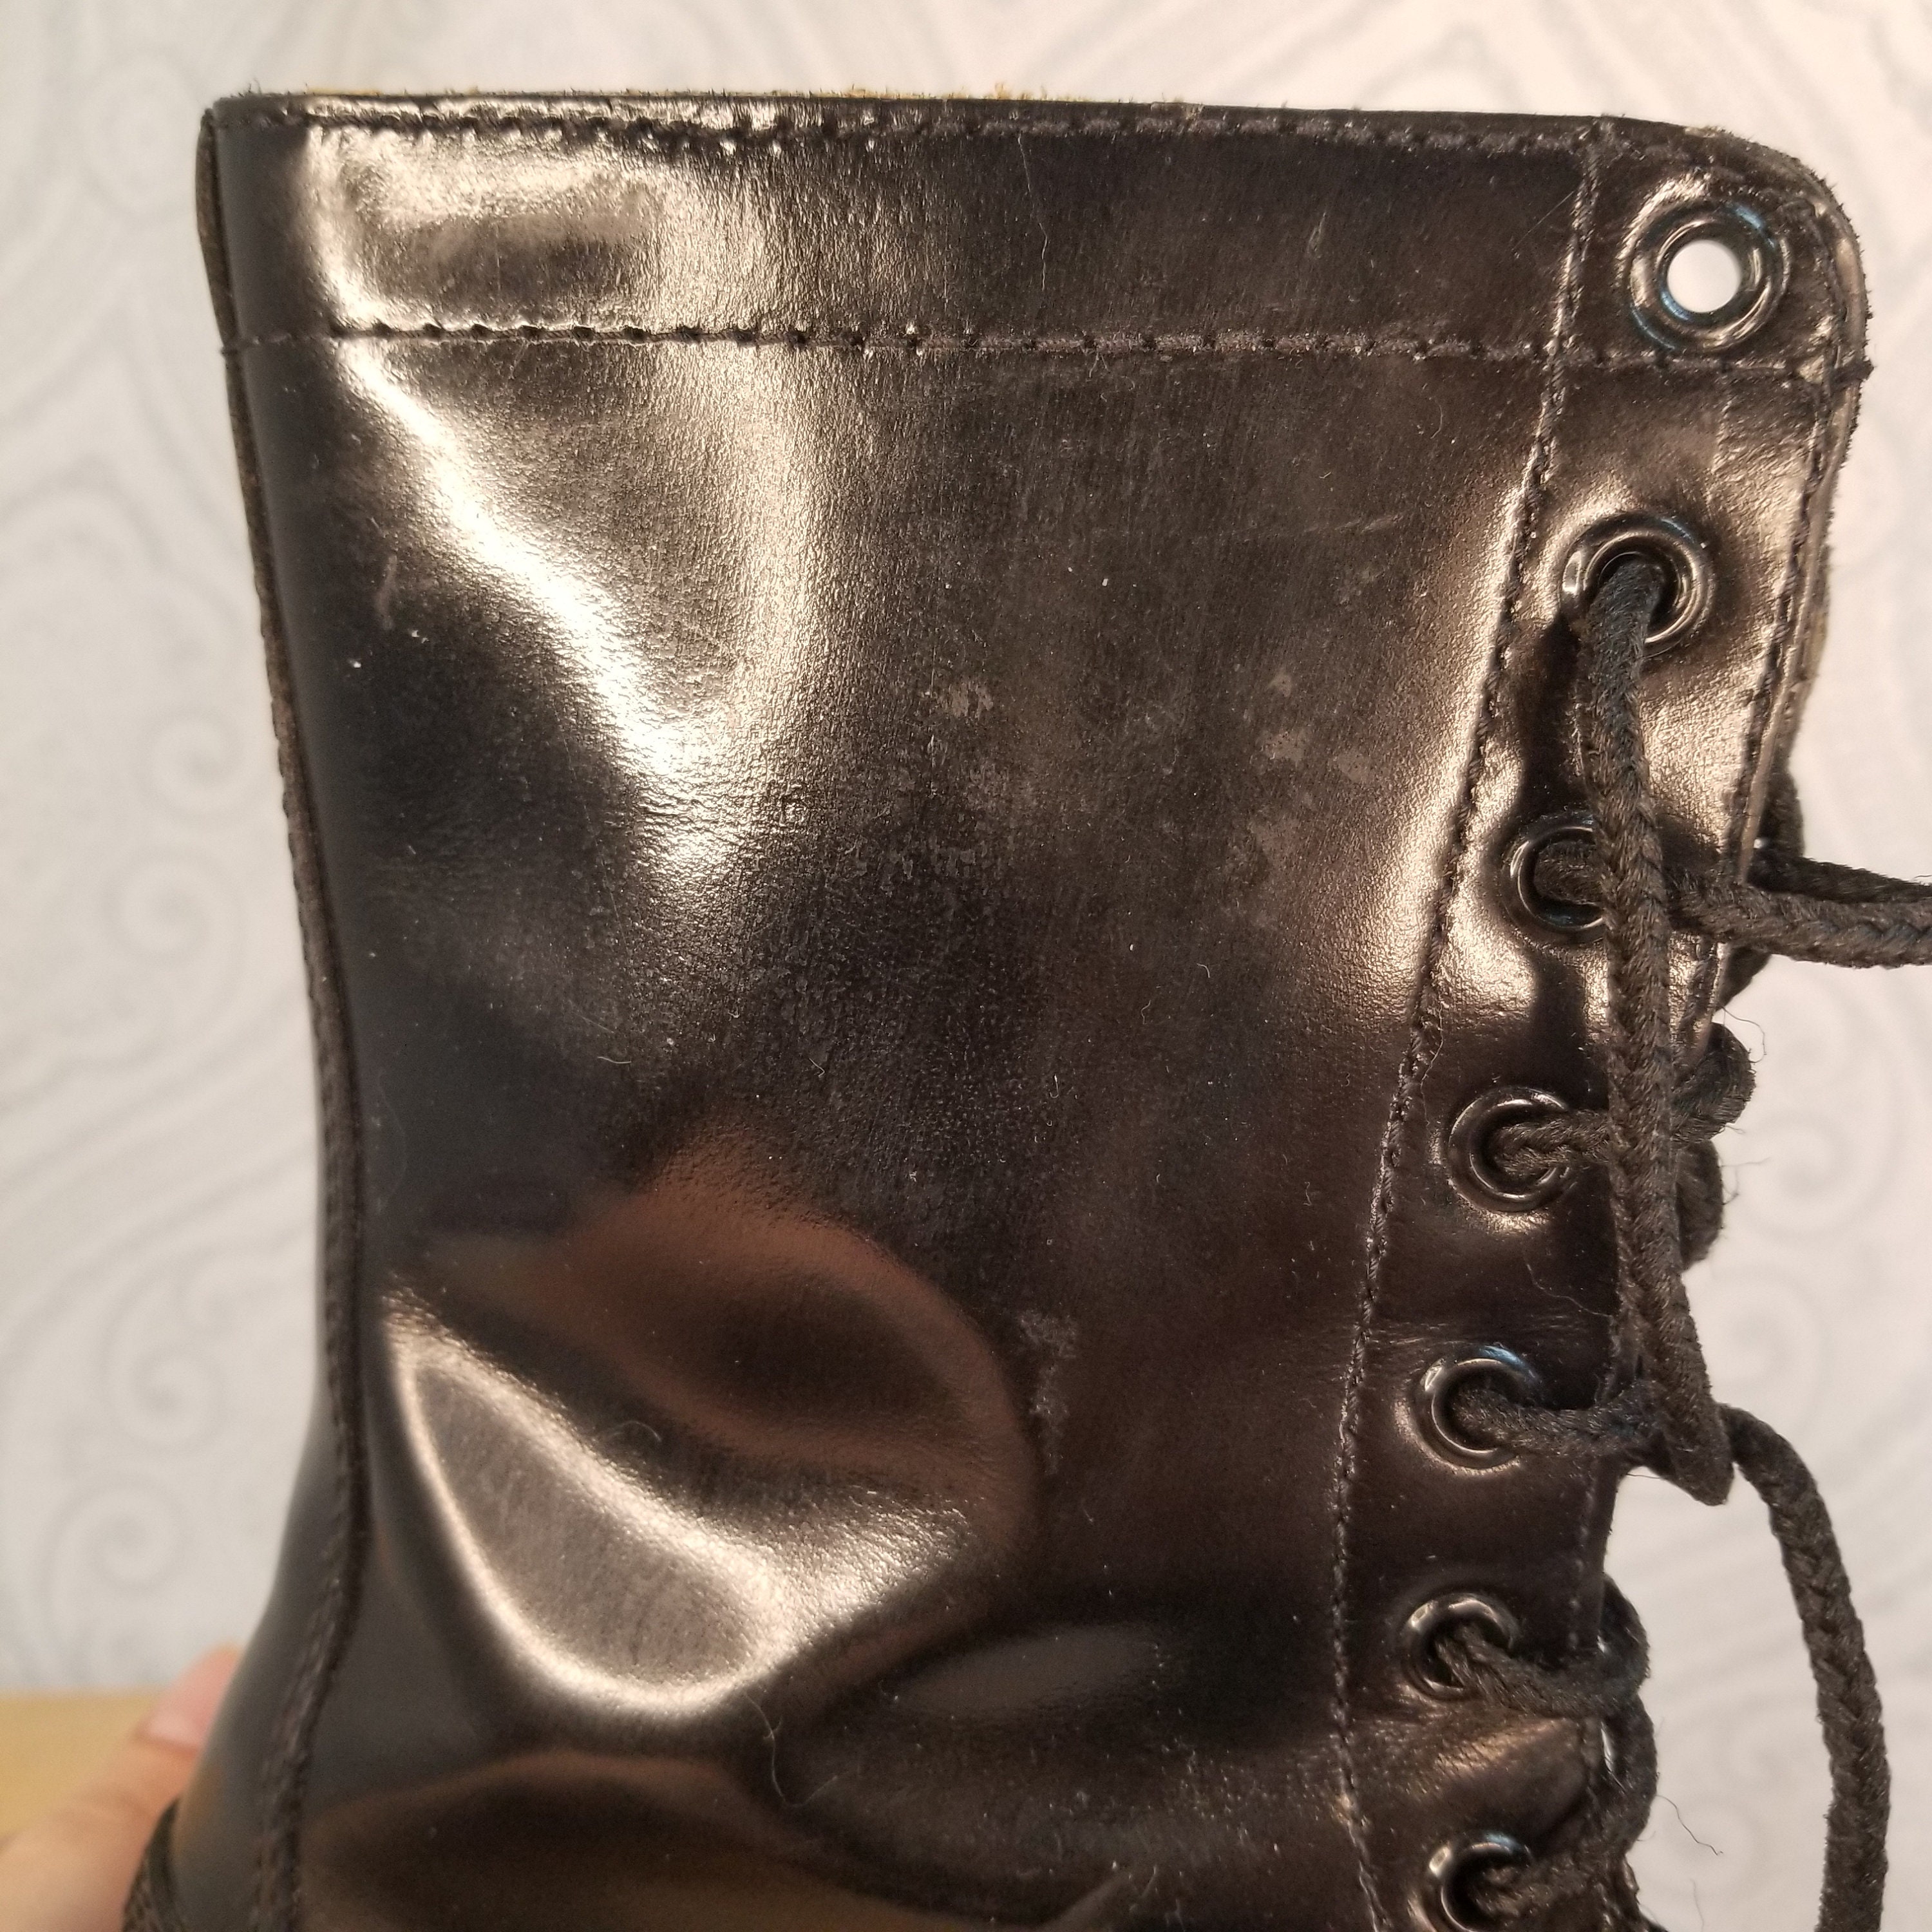 Made in USA Schoenen Herenschoenen Laarzen Rare Vintage Men's Pair-a-Trooper #502 Military Combat Patent Leather Boots Size 11E 11 Wide in Original Box Georgia Boot Co 